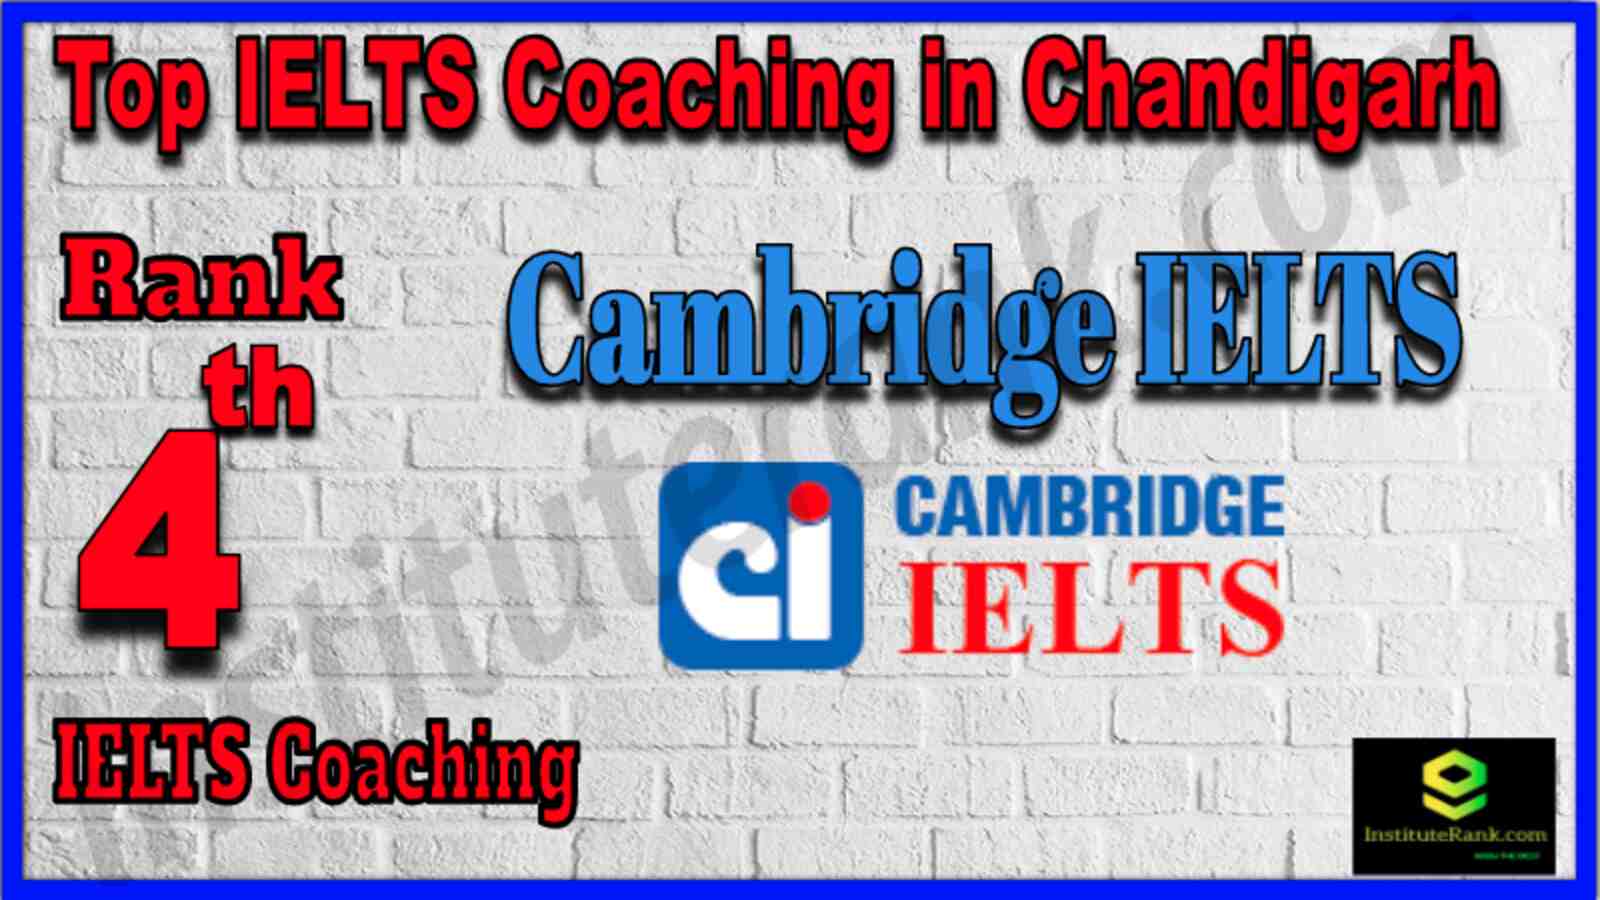 4th Best IELTS Coaching in Chandigarh